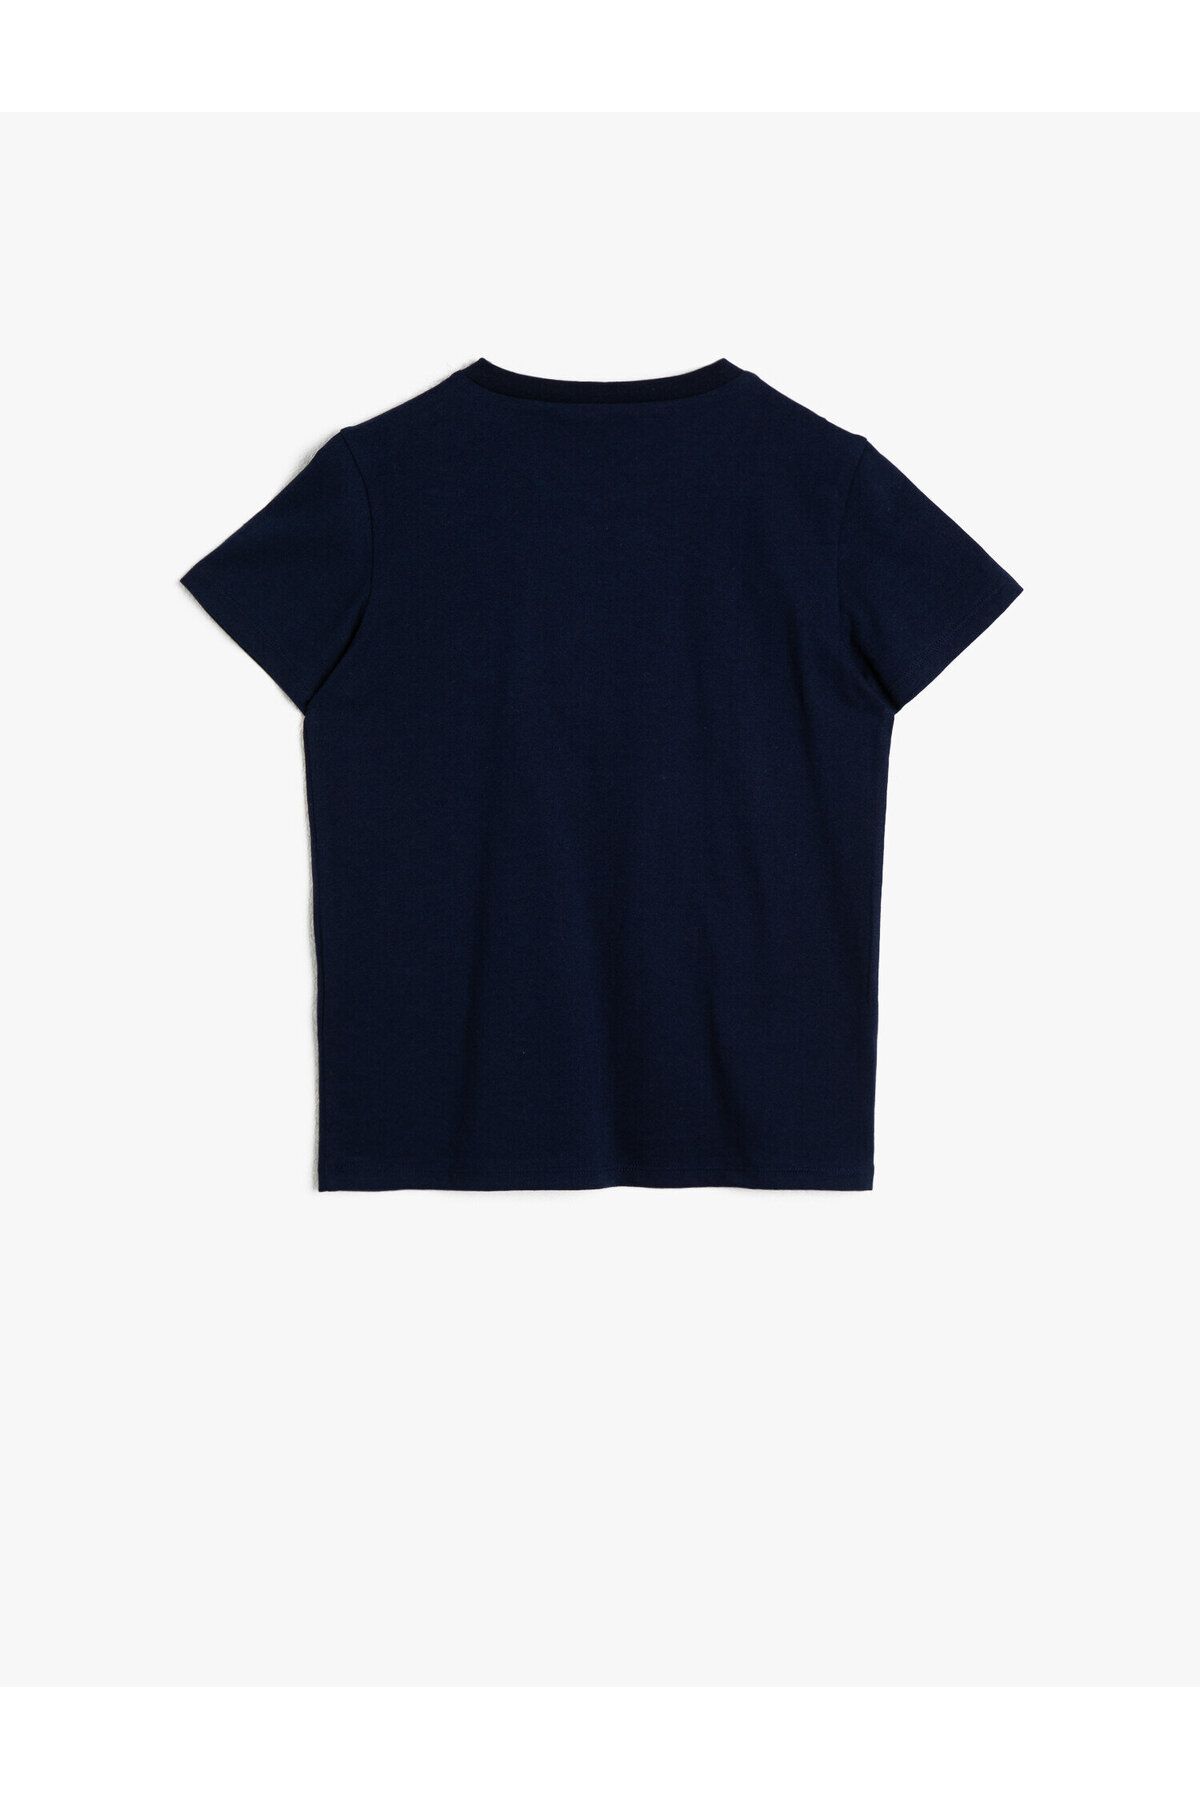 Koton Erkek Çocuk Lacivert T-Shirt 0YKB16033OK